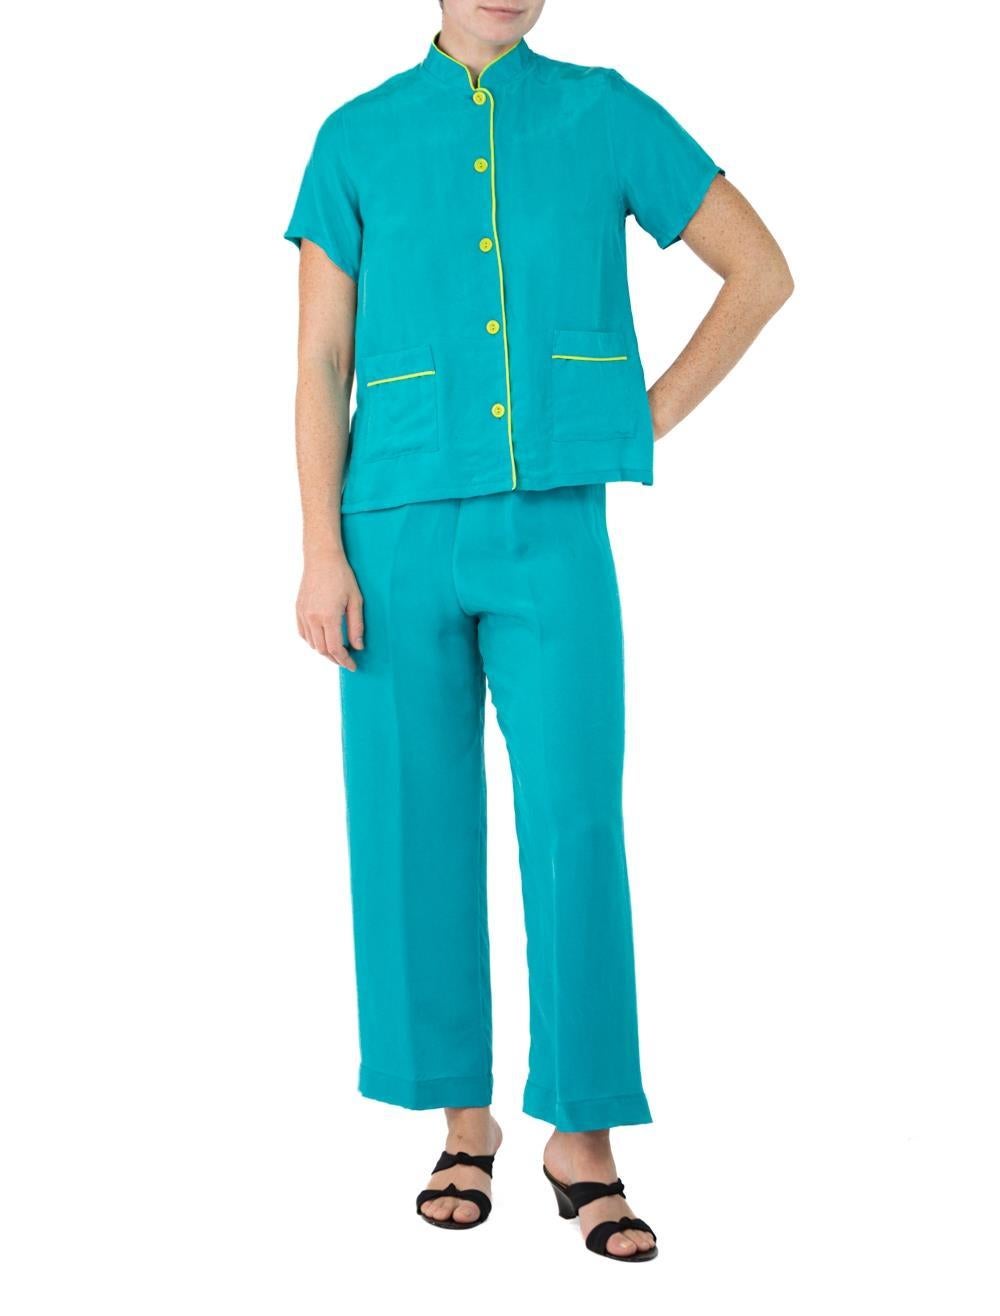 Women's Morphew Collection Teal & Neon Yellow Trim Cold Rayon Bias Pajamas Master Medium For Sale